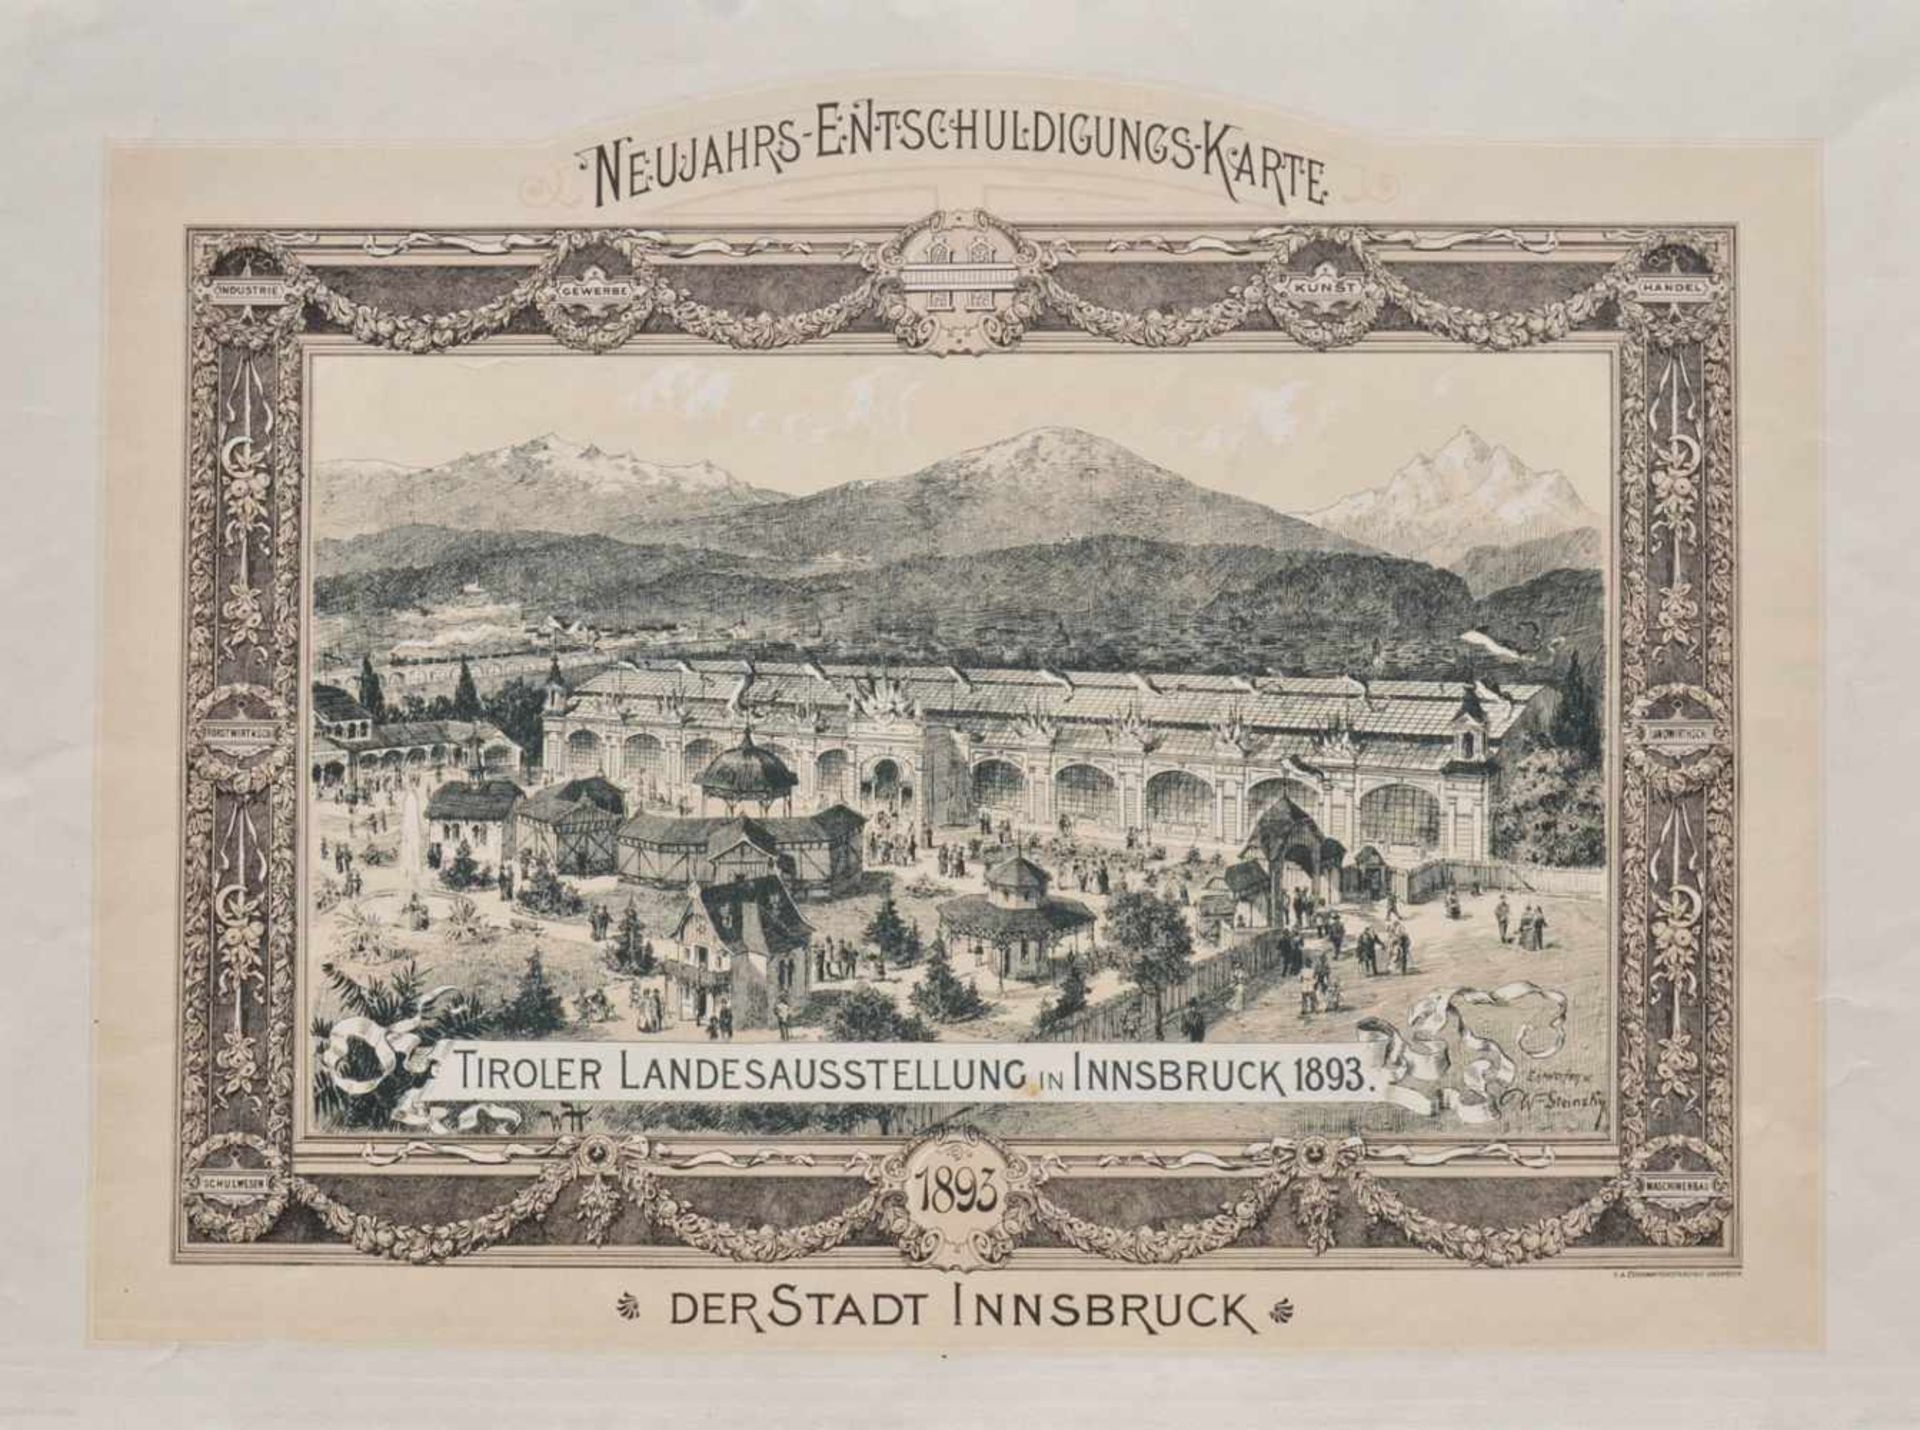 Neujahrs-Entschuldigungs-Karte der Stadt Innsbruck 1893;(Tiroler Landesausstellung in Innsbruck